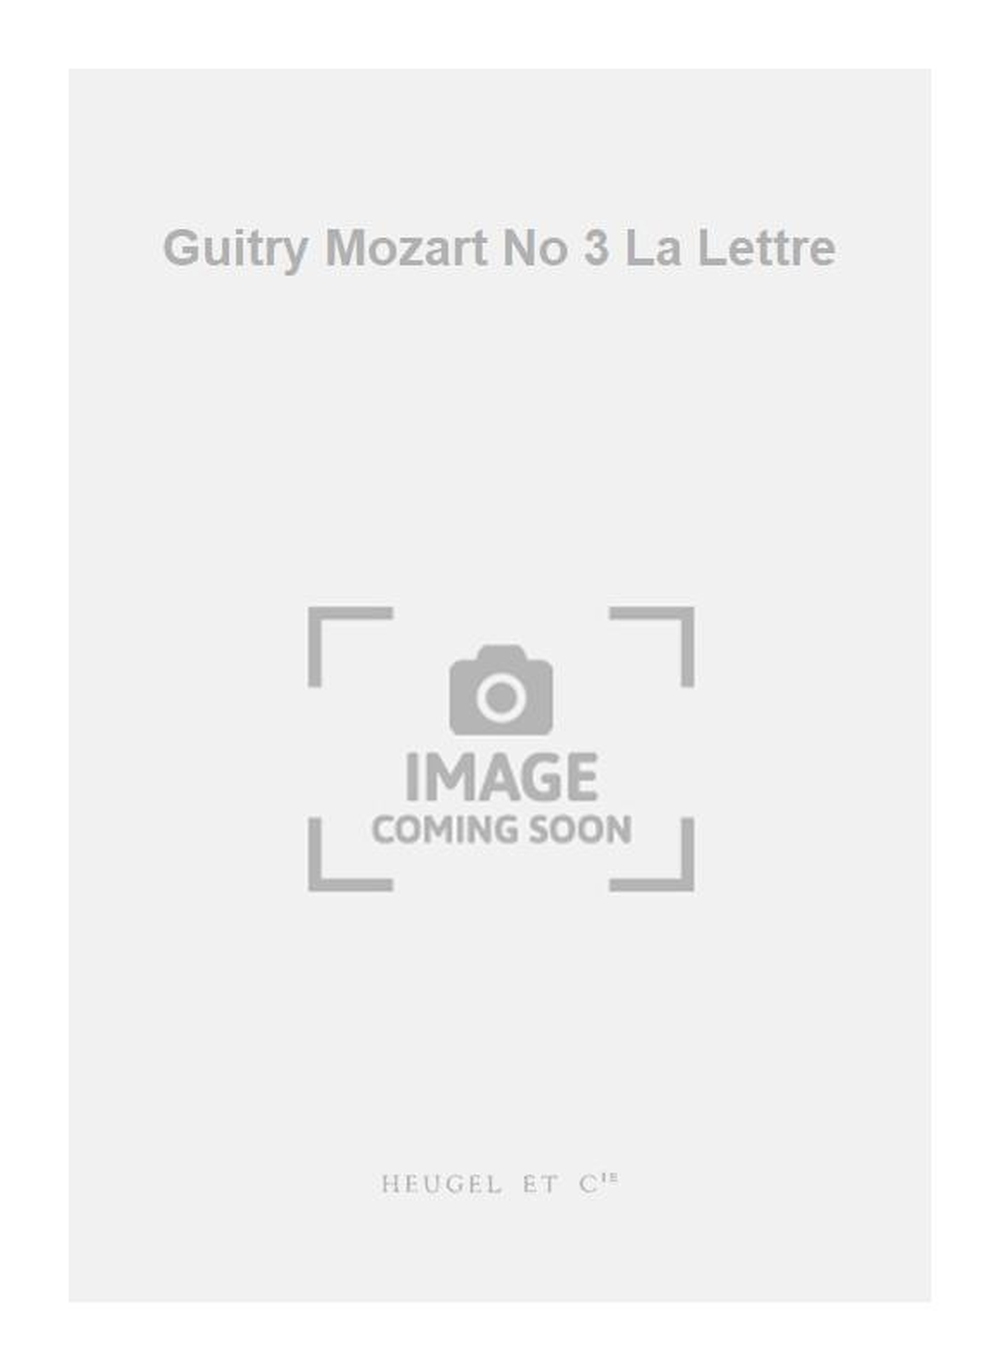 Reynaldo Hahn: Guitry Mozart No 3 La Lettre